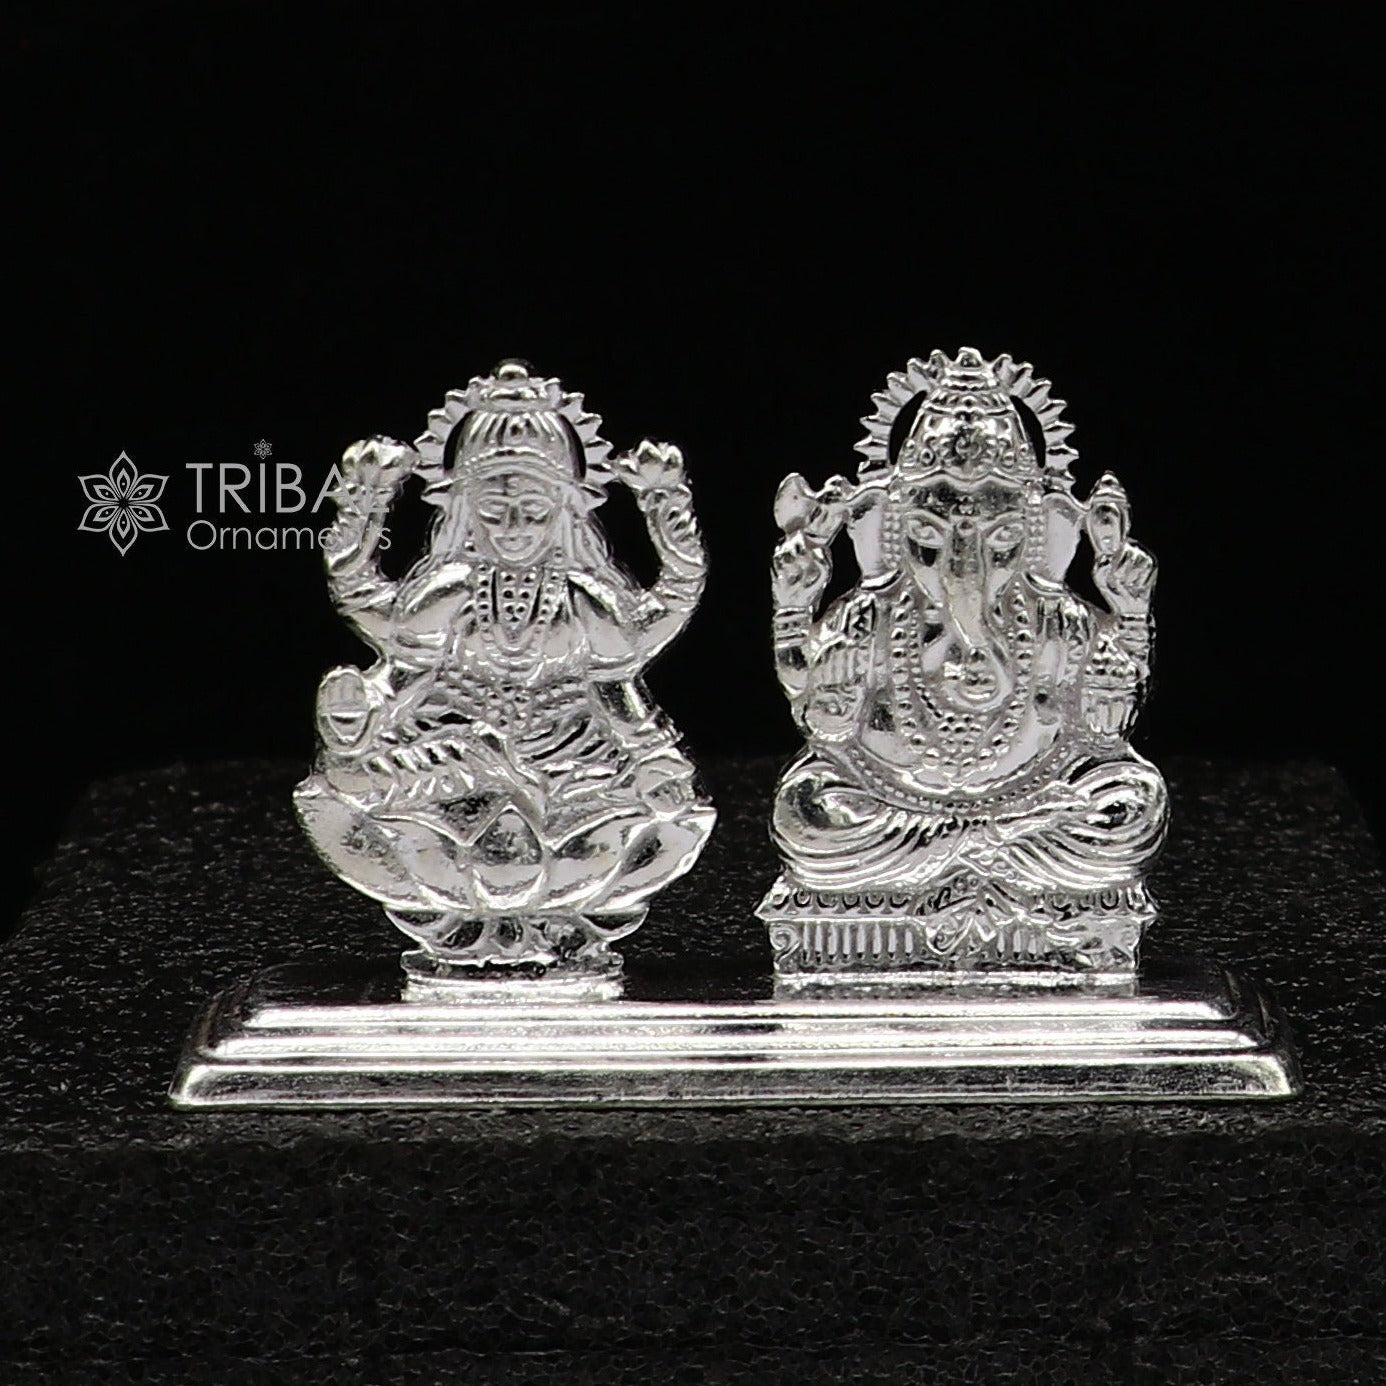 1.6" 925 Sterling silver handmade gorgeous Hindu idols Lakshmi and Ganesha statue, puja article figurine, home décor Diwali puja gift art666 - TRIBAL ORNAMENTS